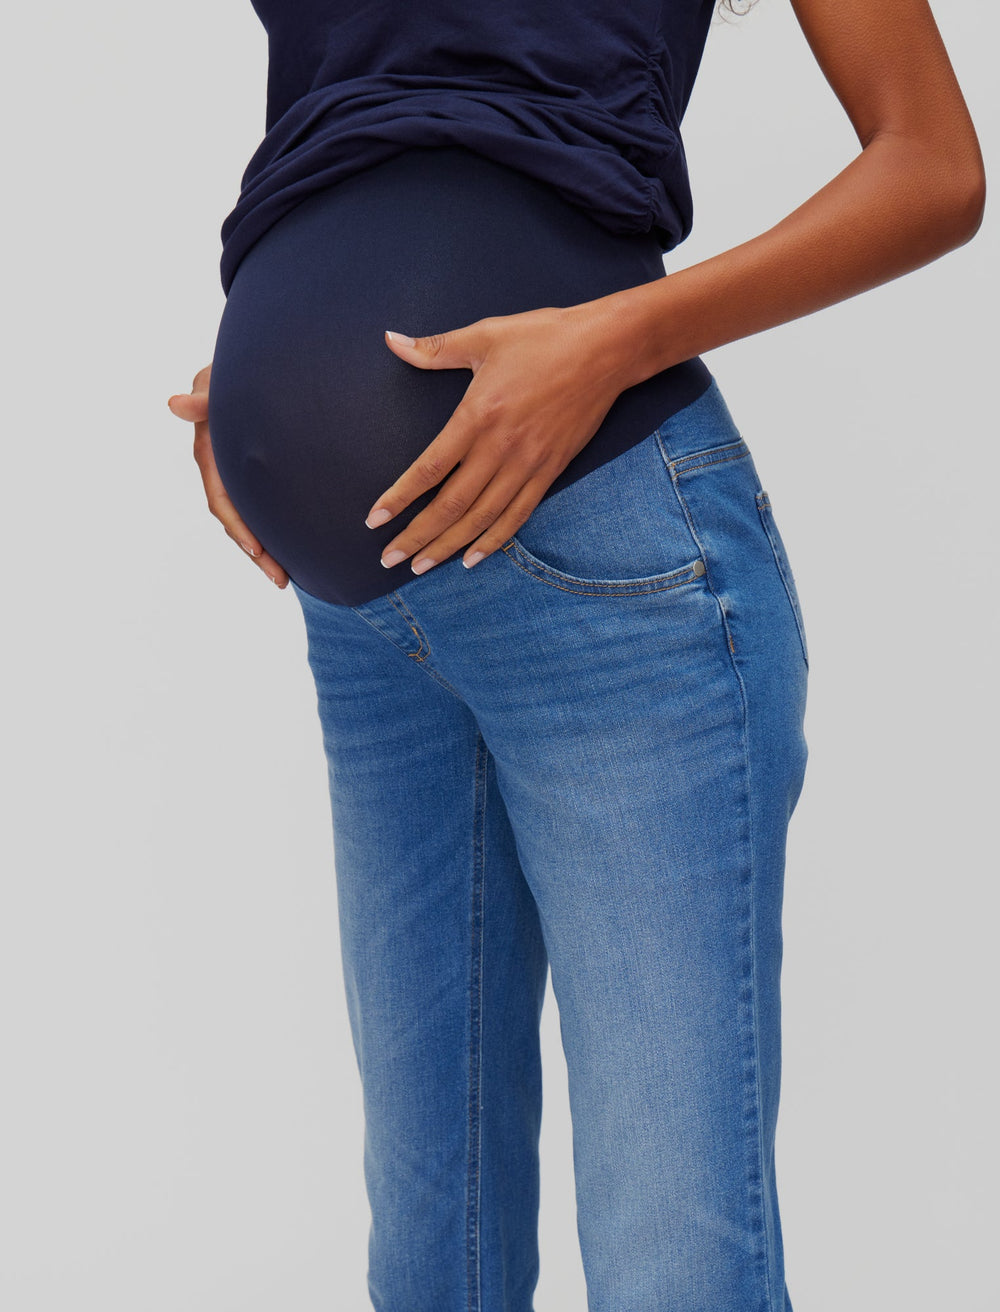 Motherhood Maternity Pants Size S Stretch Fit Belly Khaki Light Weight  Summer 